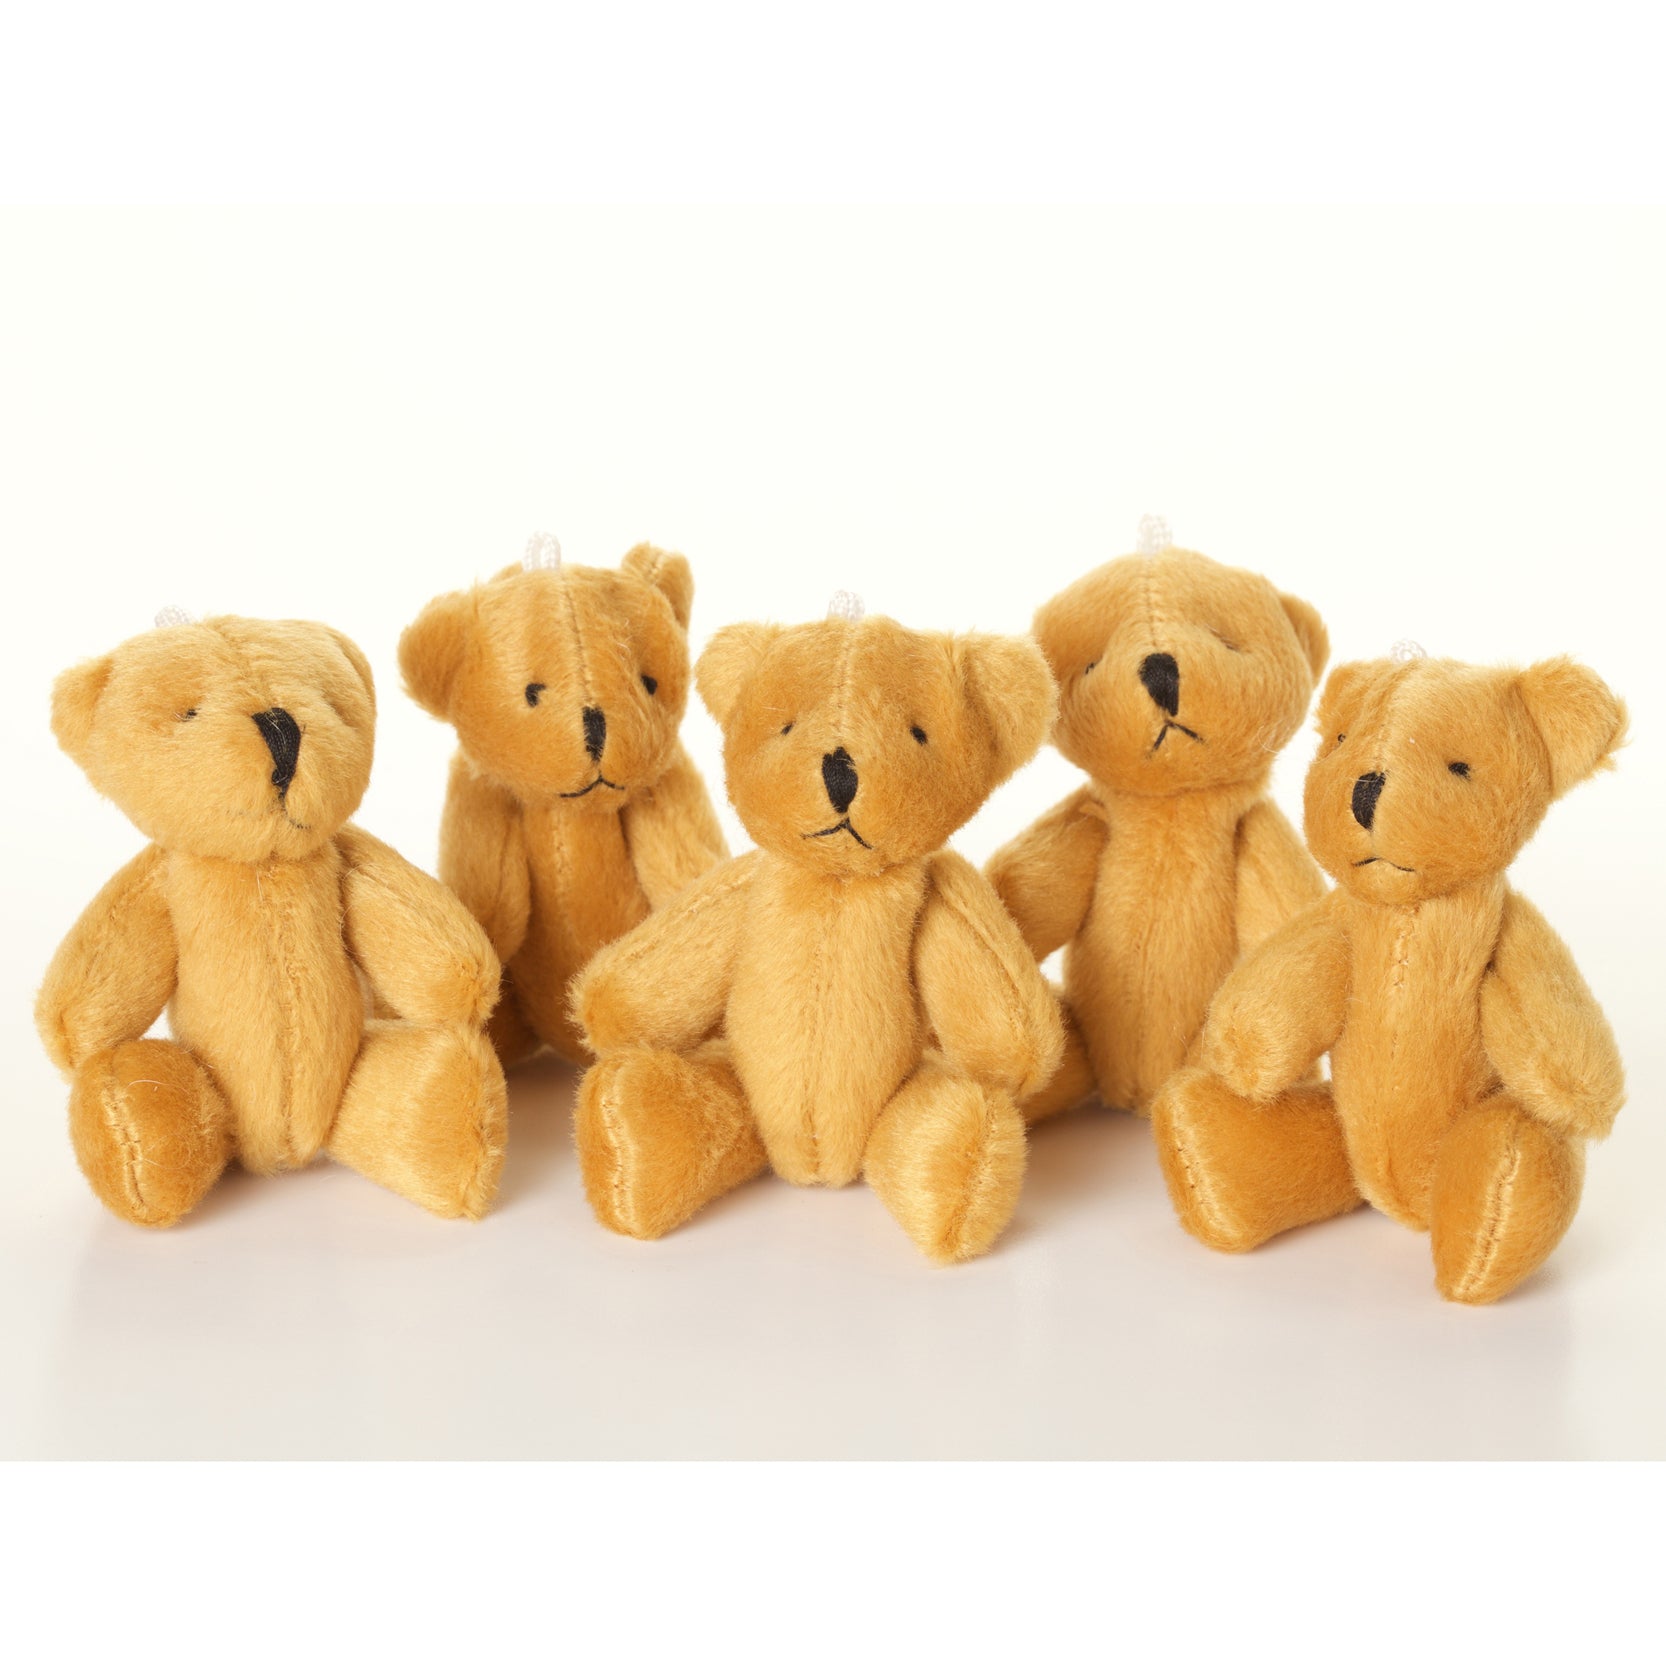 Small BROWN Teddy Bears X 25 - Cute Soft Adorable